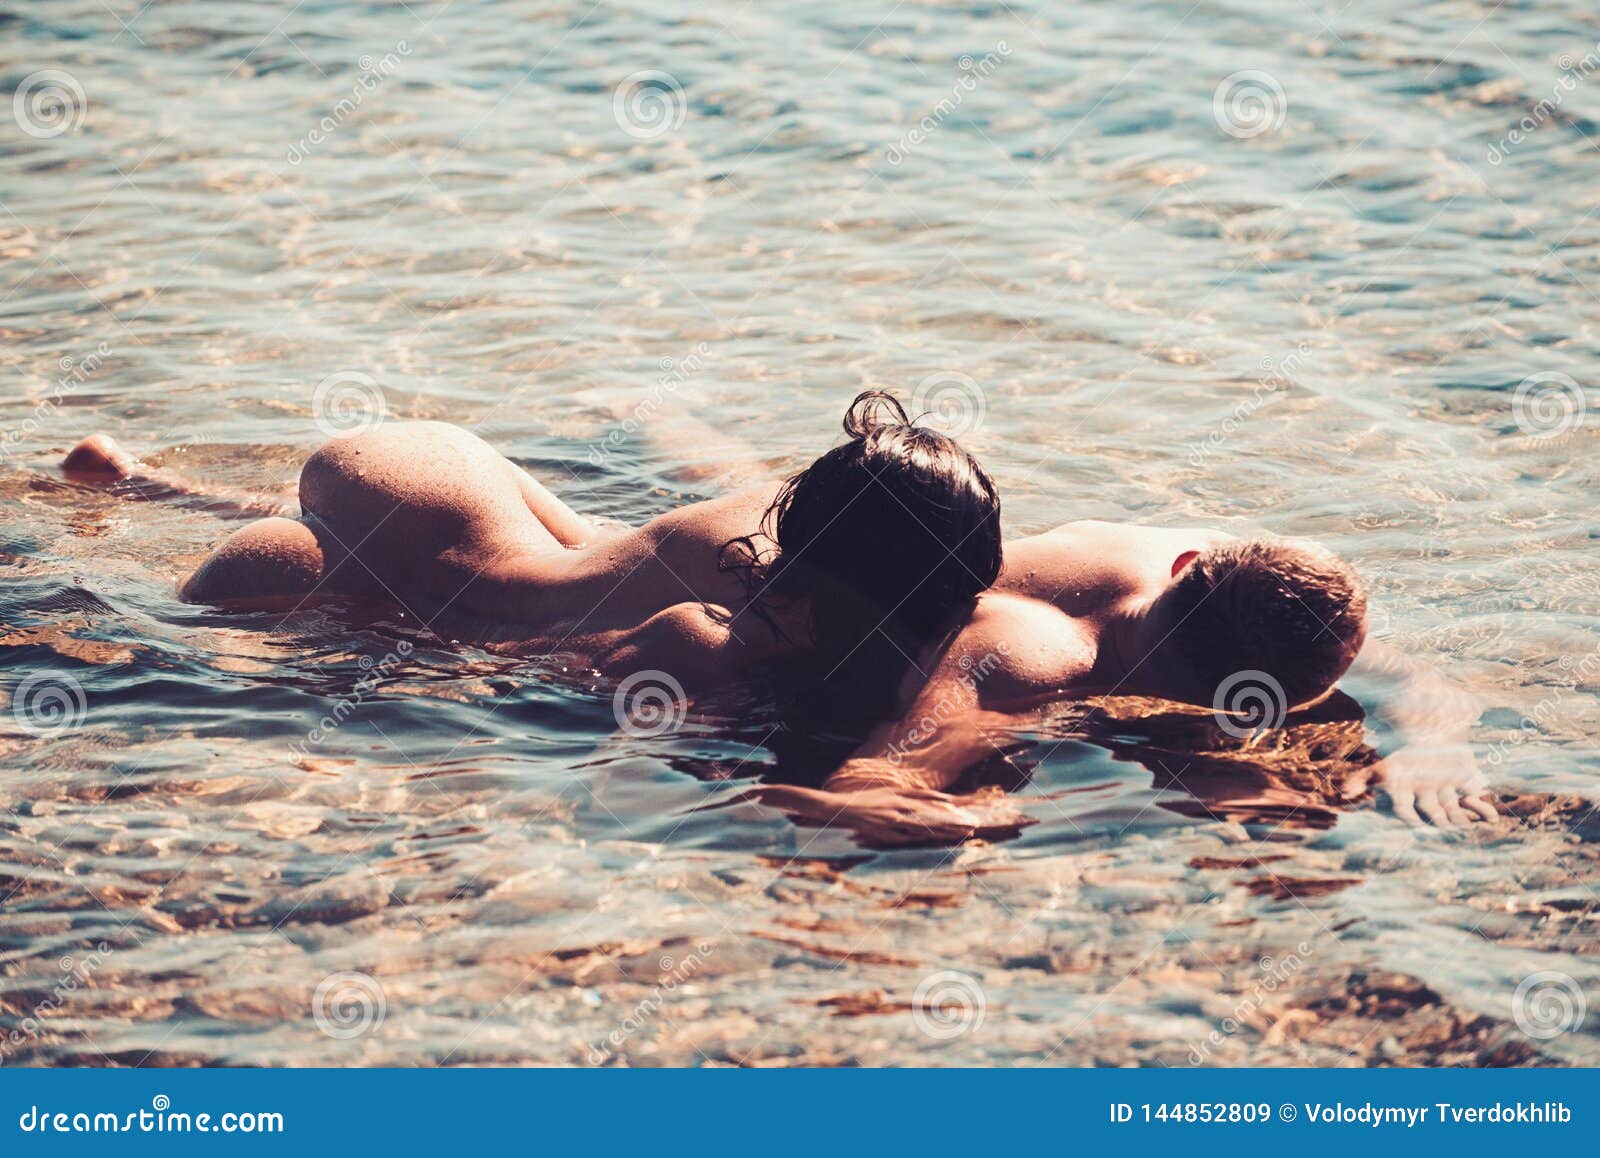 dan saraceno recommends teen nude beach sex pic